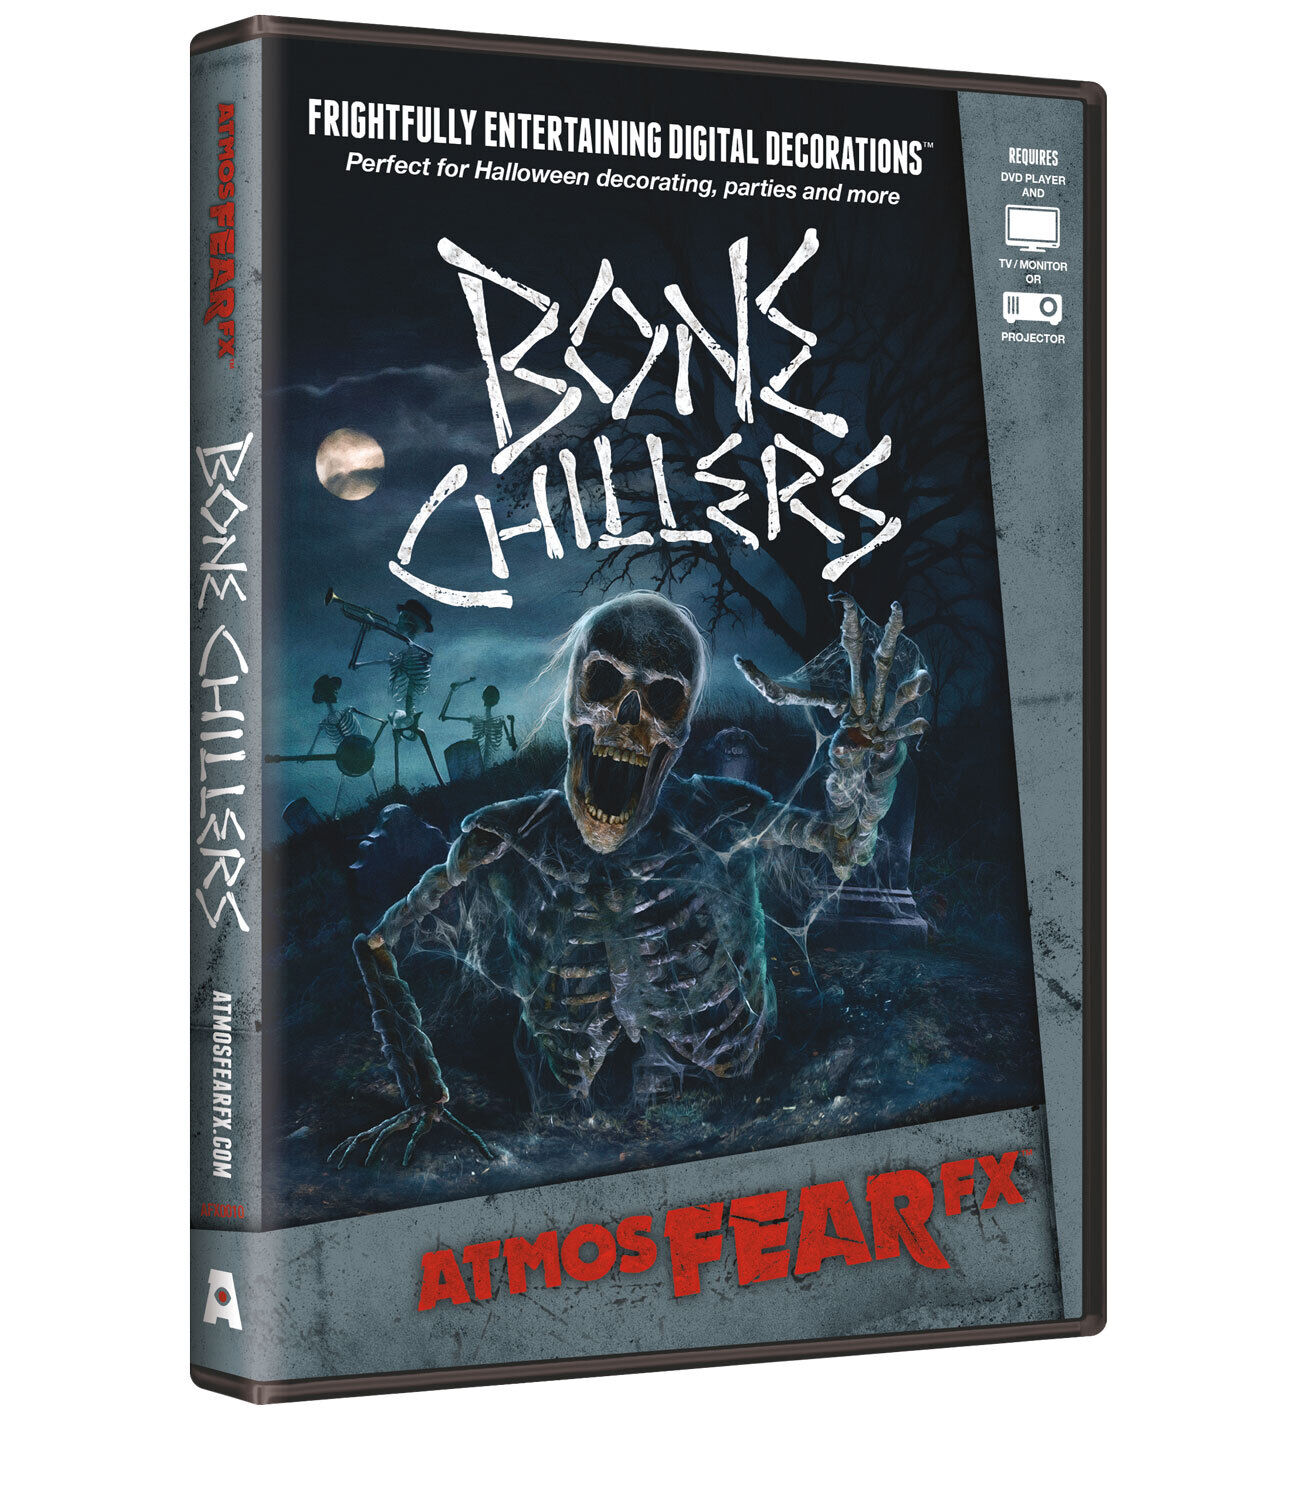 AtmosFearFX Bone Chillers Halloween Digital Decoration DVD